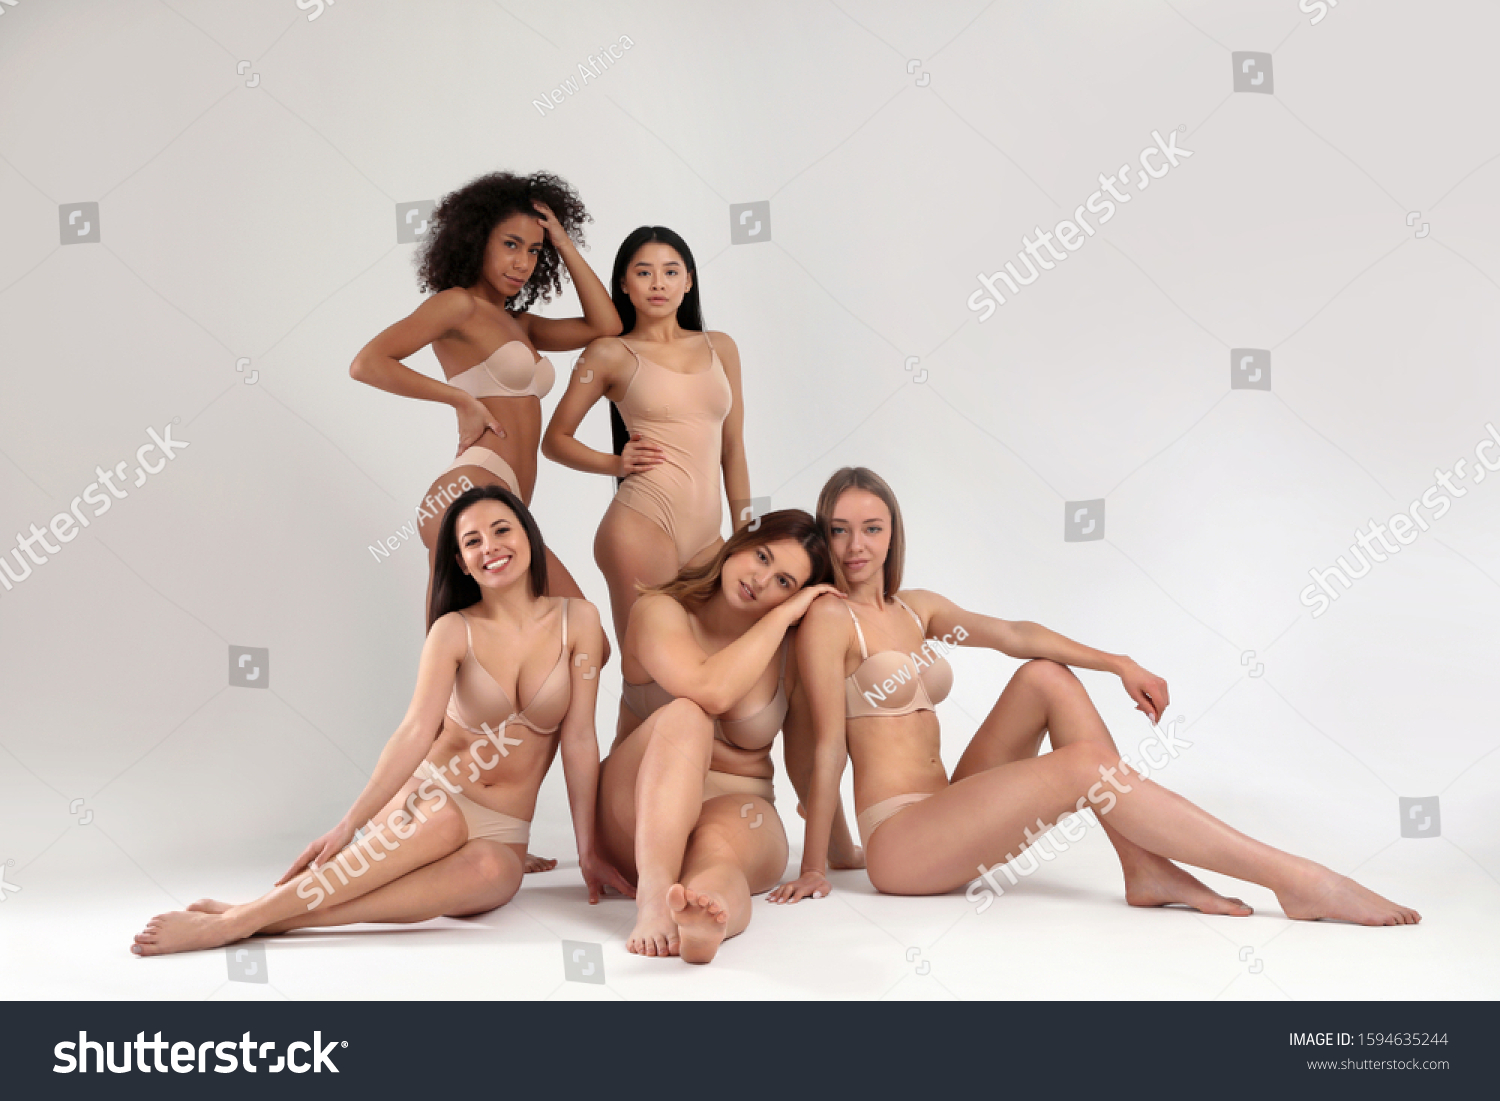 Women body types naked